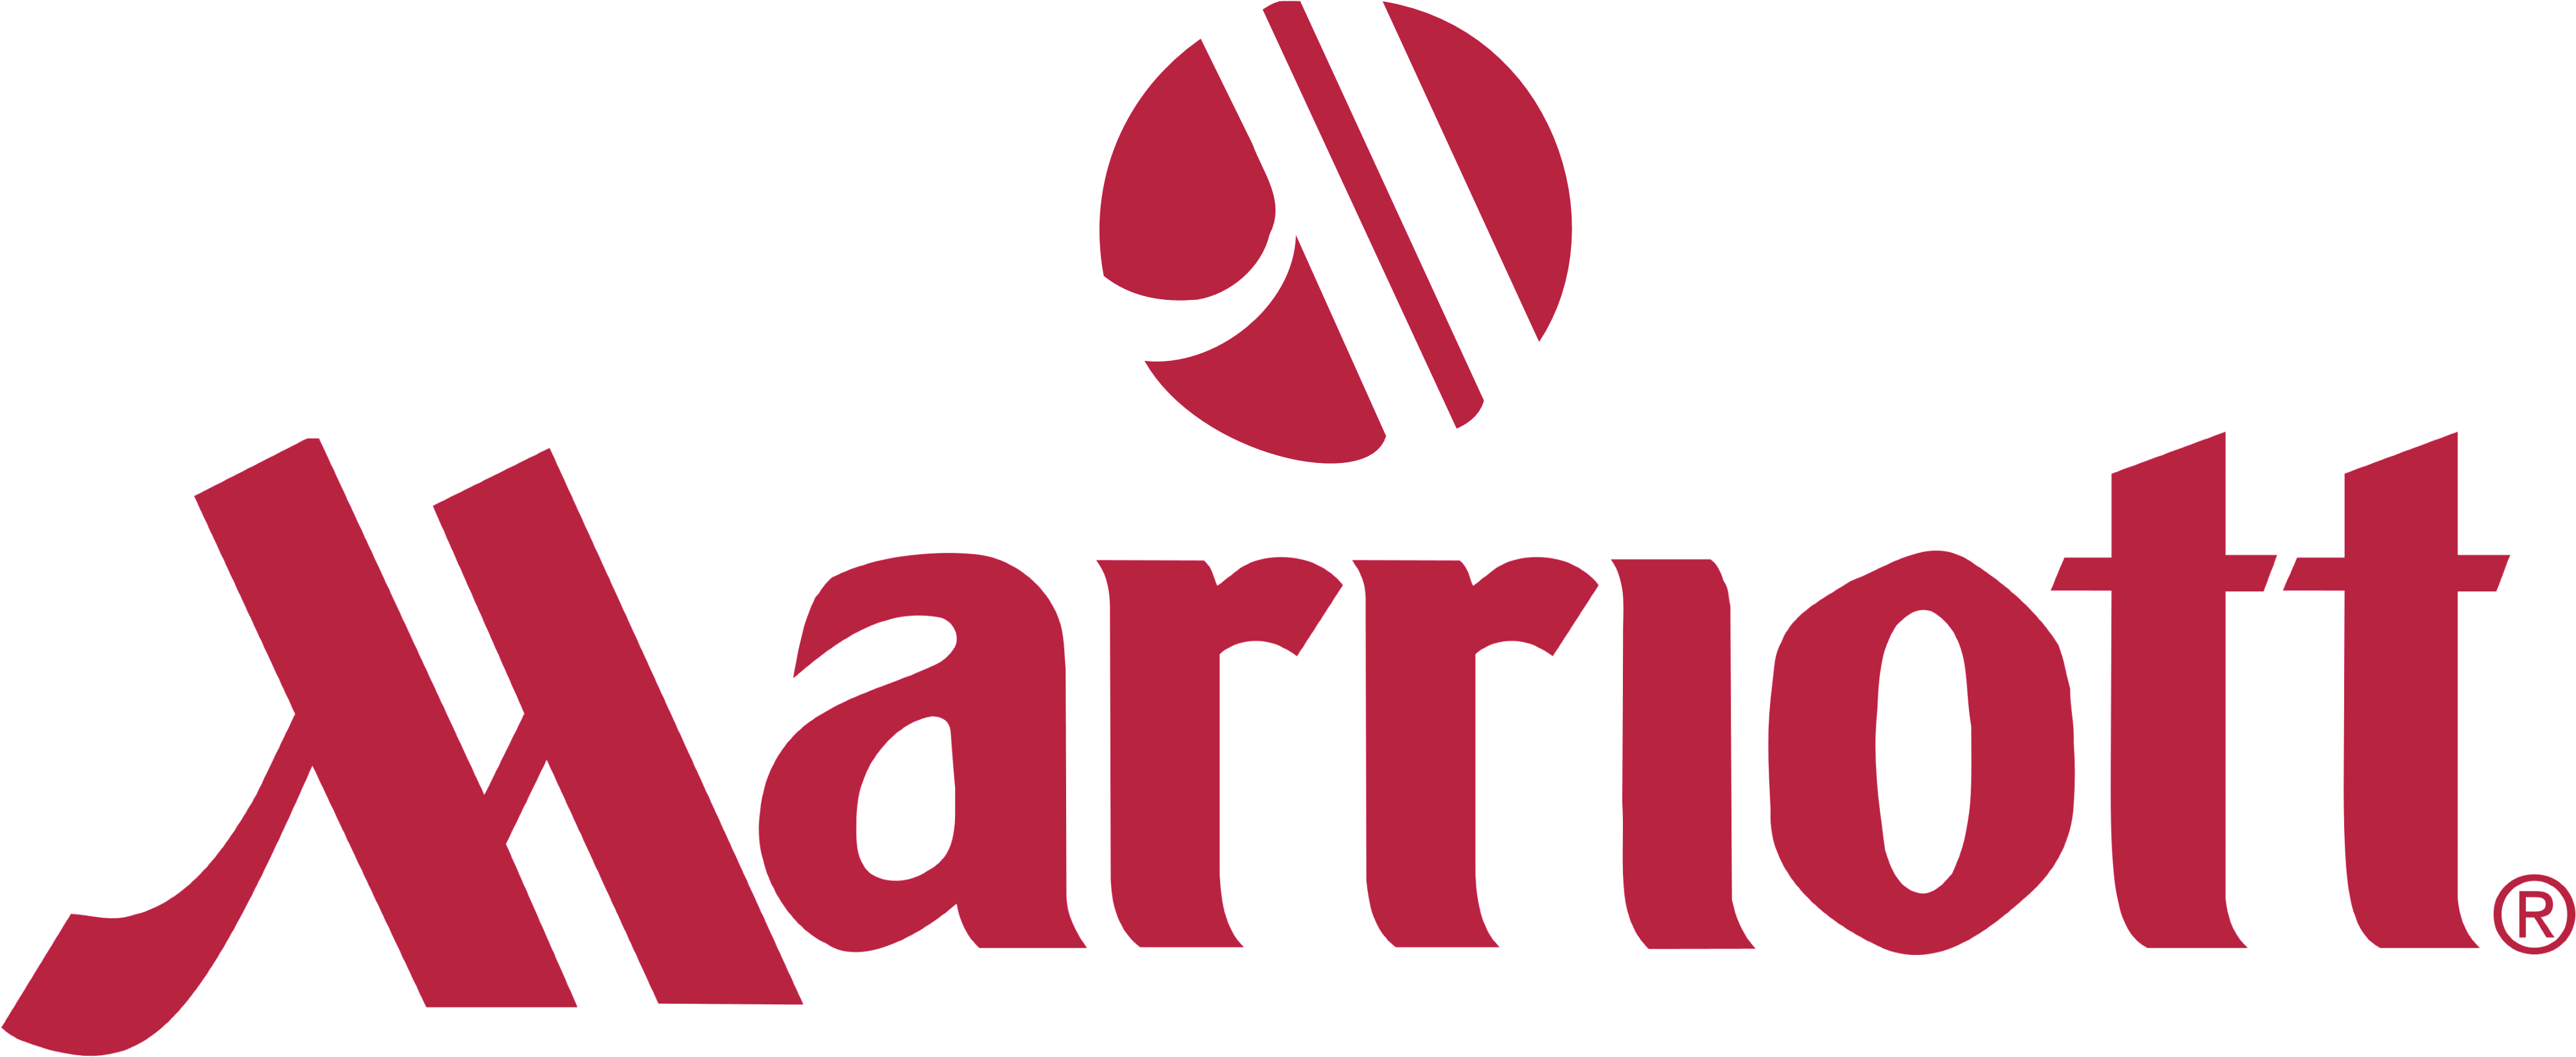 Corporate Groups - Marriott Hotel Group Logo (4086x1700)